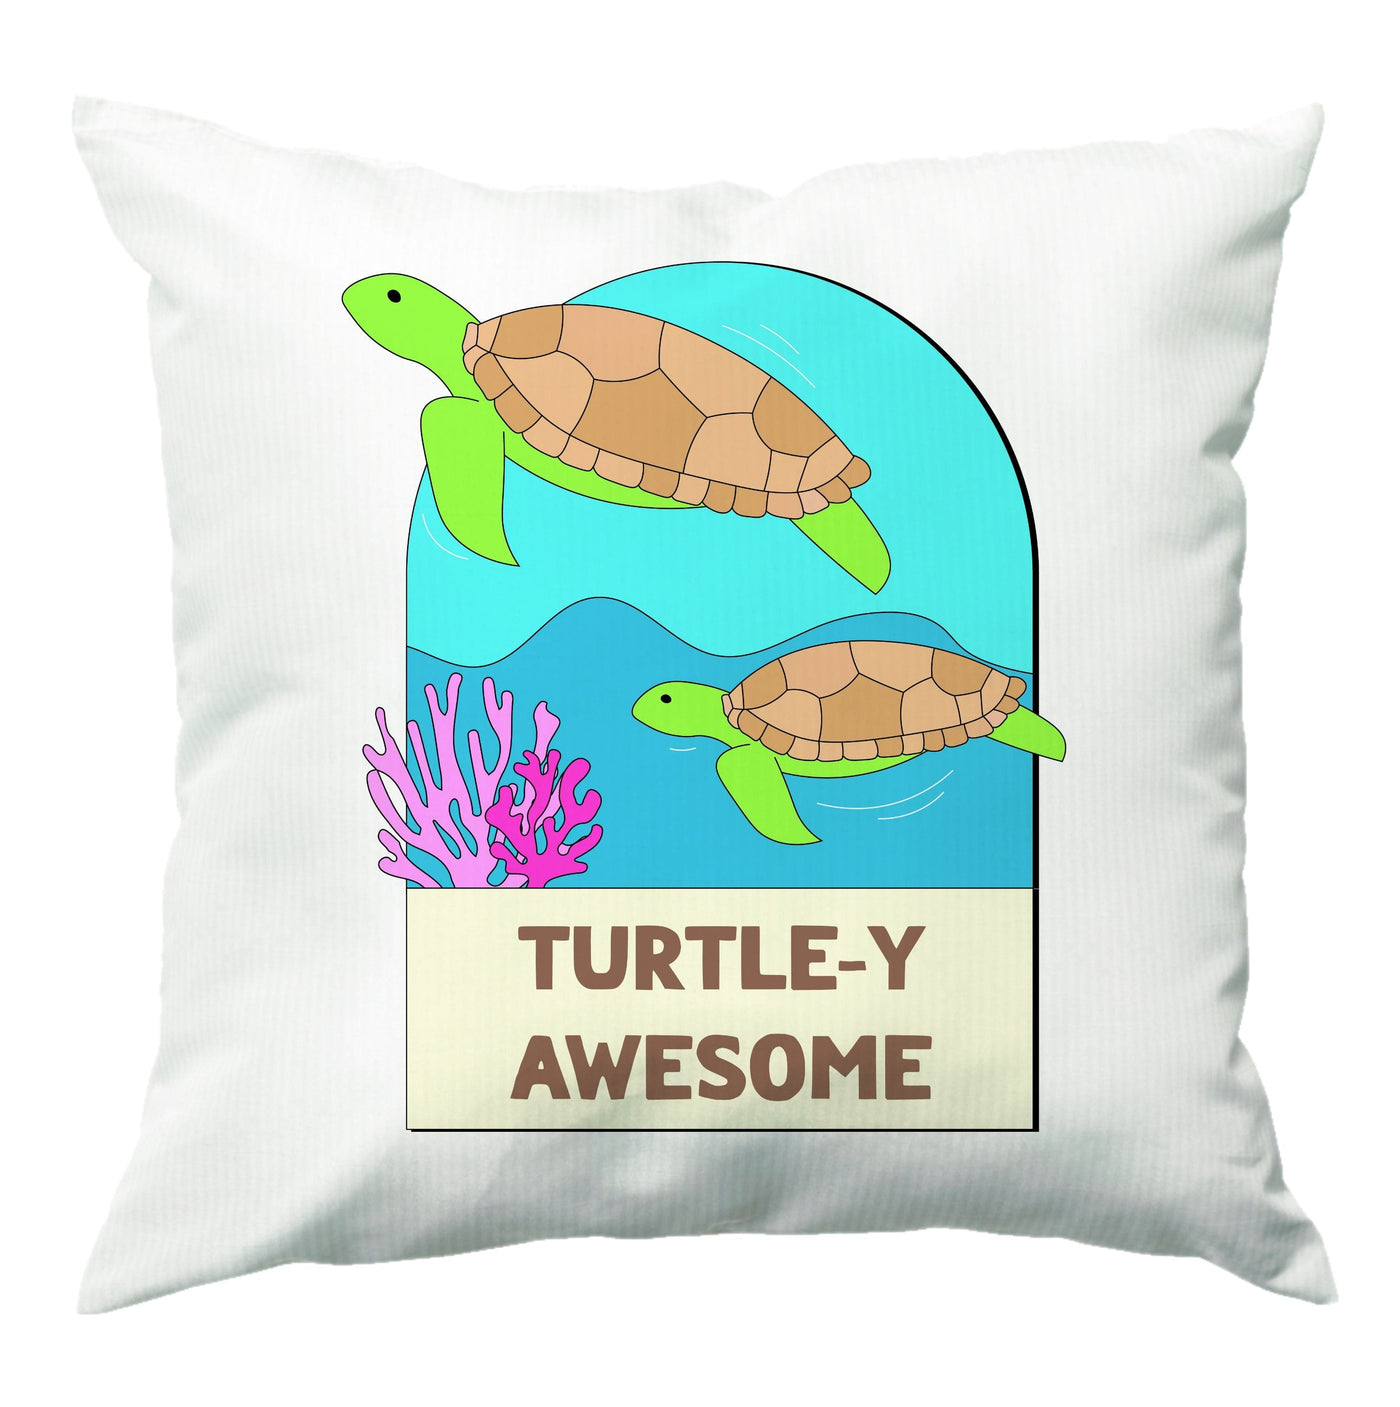 Turtle-y Awesome - Sealife Cushion